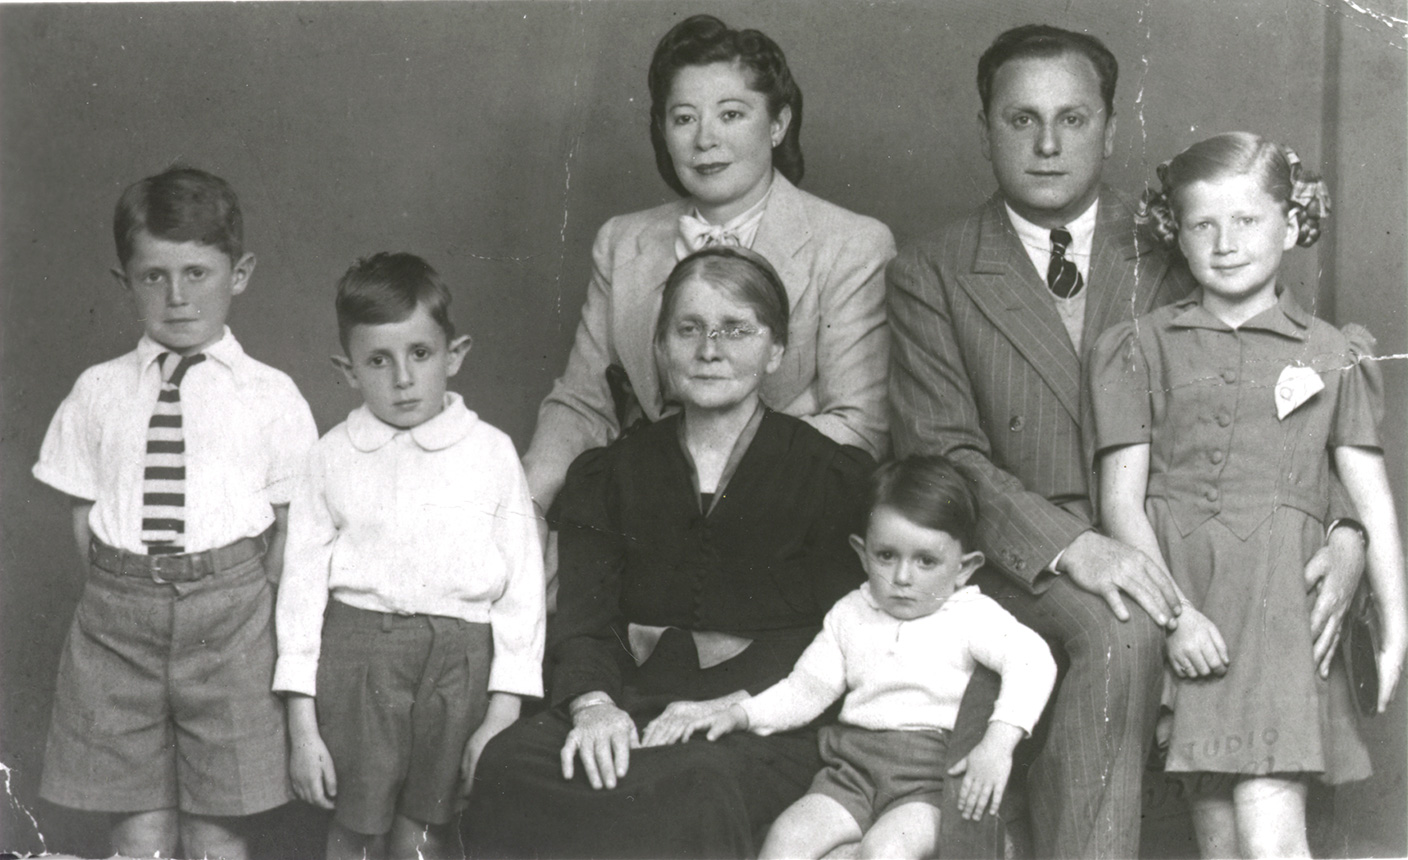 Cassuto Family Portrait (1941)